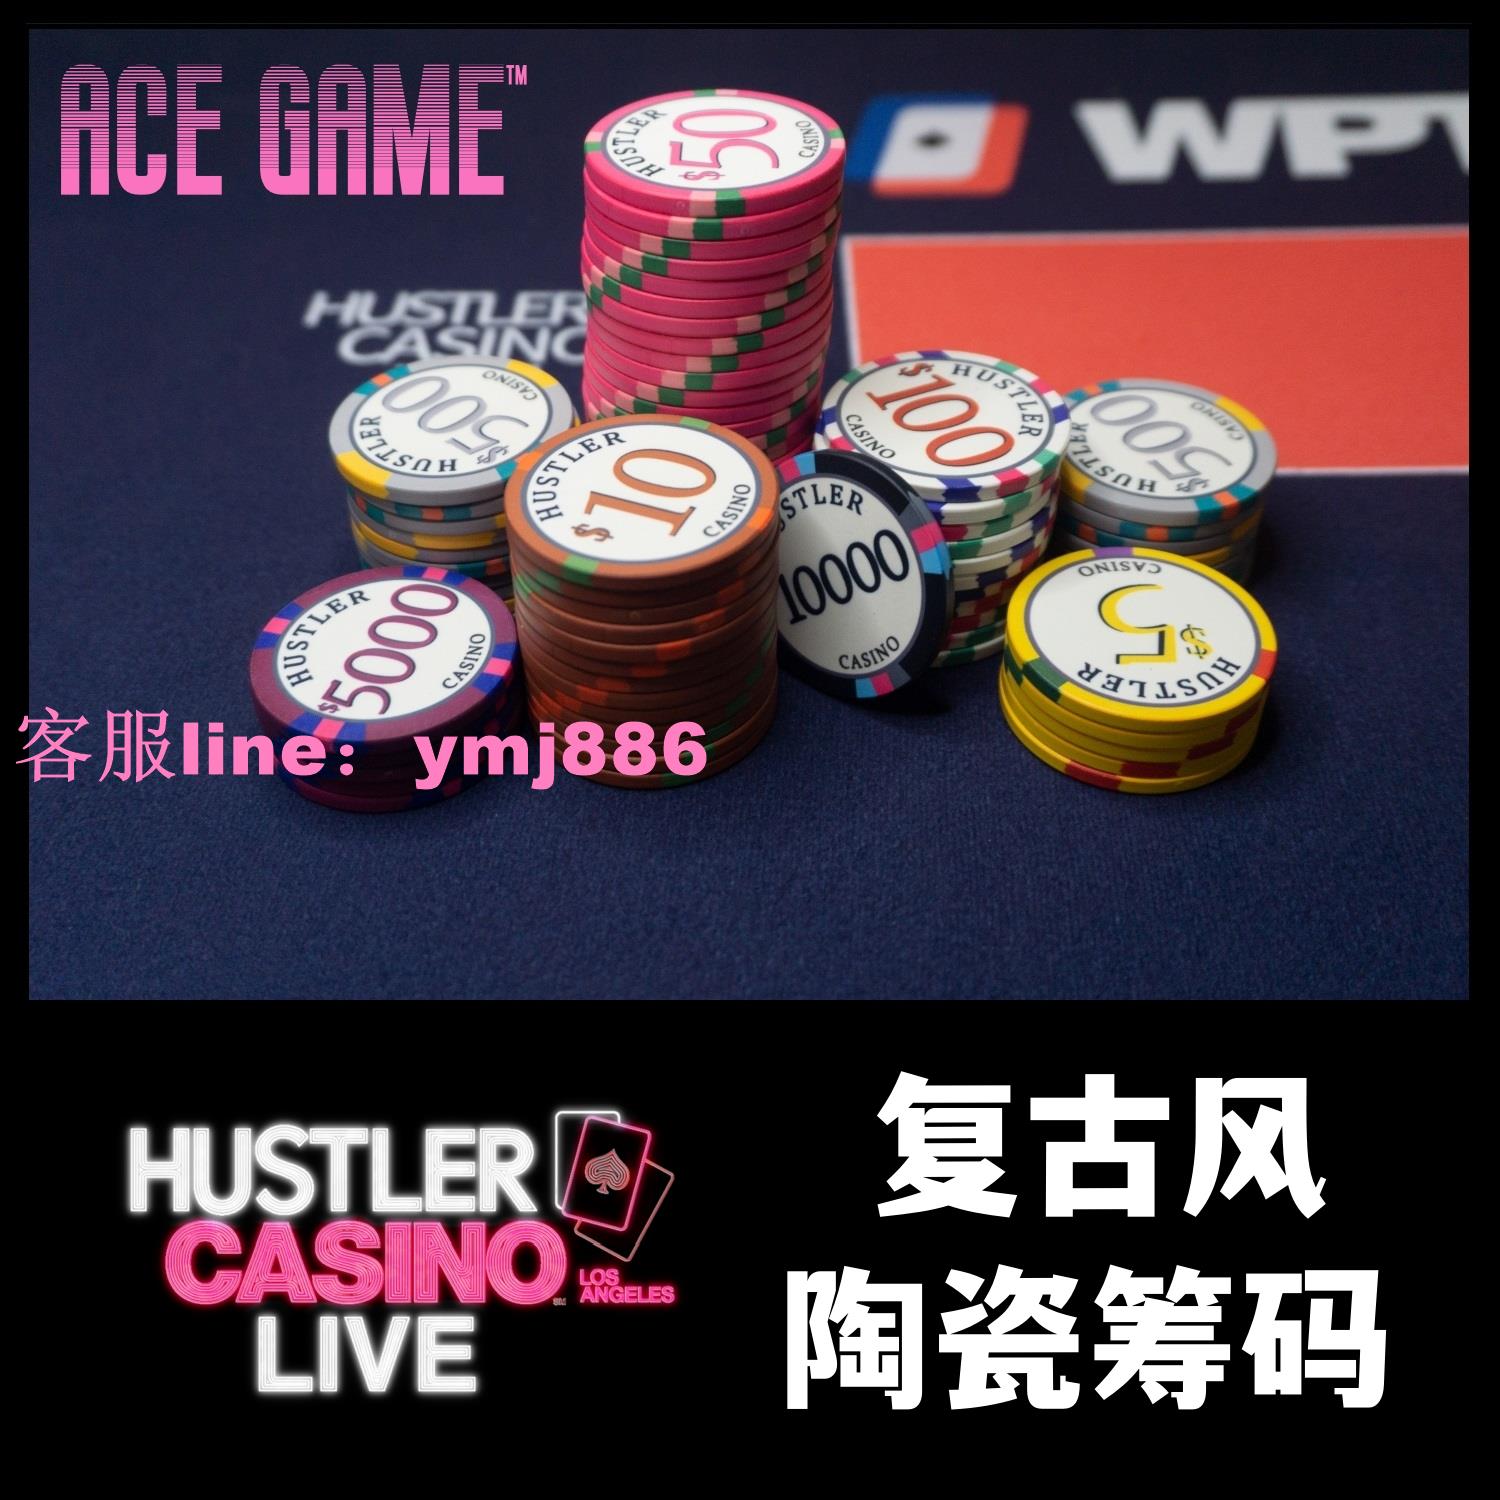 Hustler 43mm大號德州撲克陶瓷籌碼面值高端poker牌幣德撲專用ACE